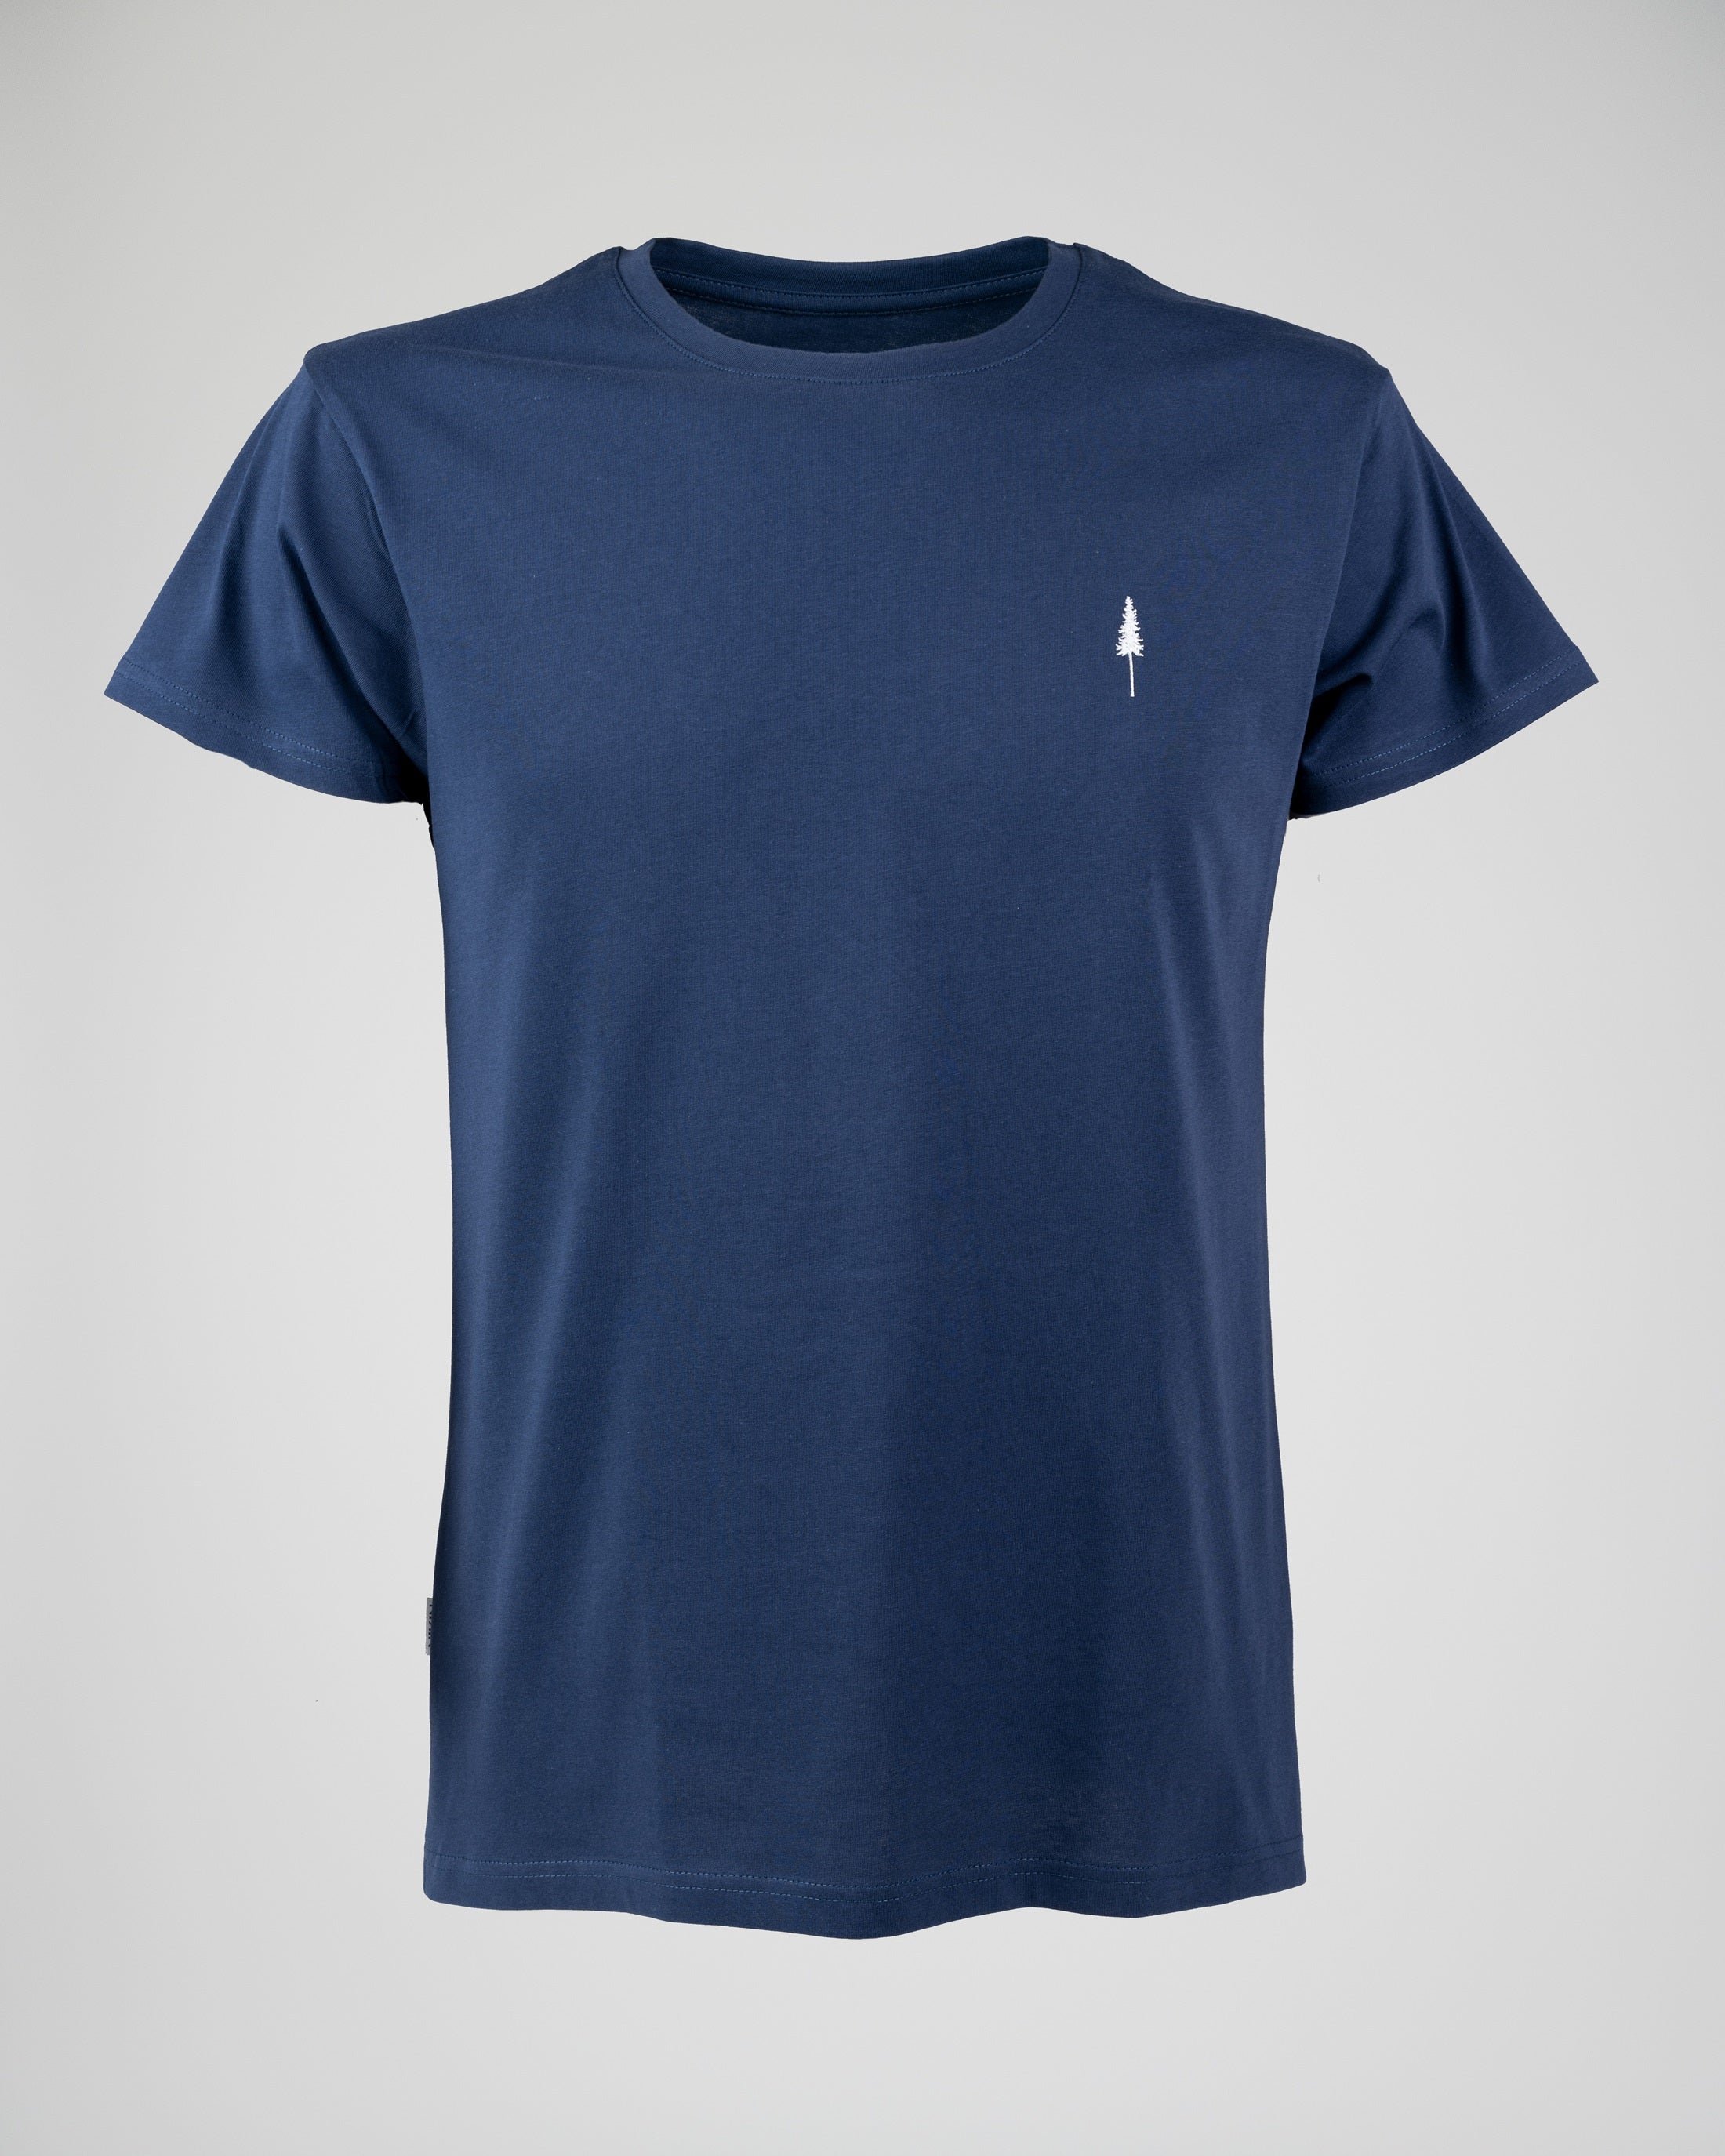 Men's organic cotton T-shirt Treeshirt Navy